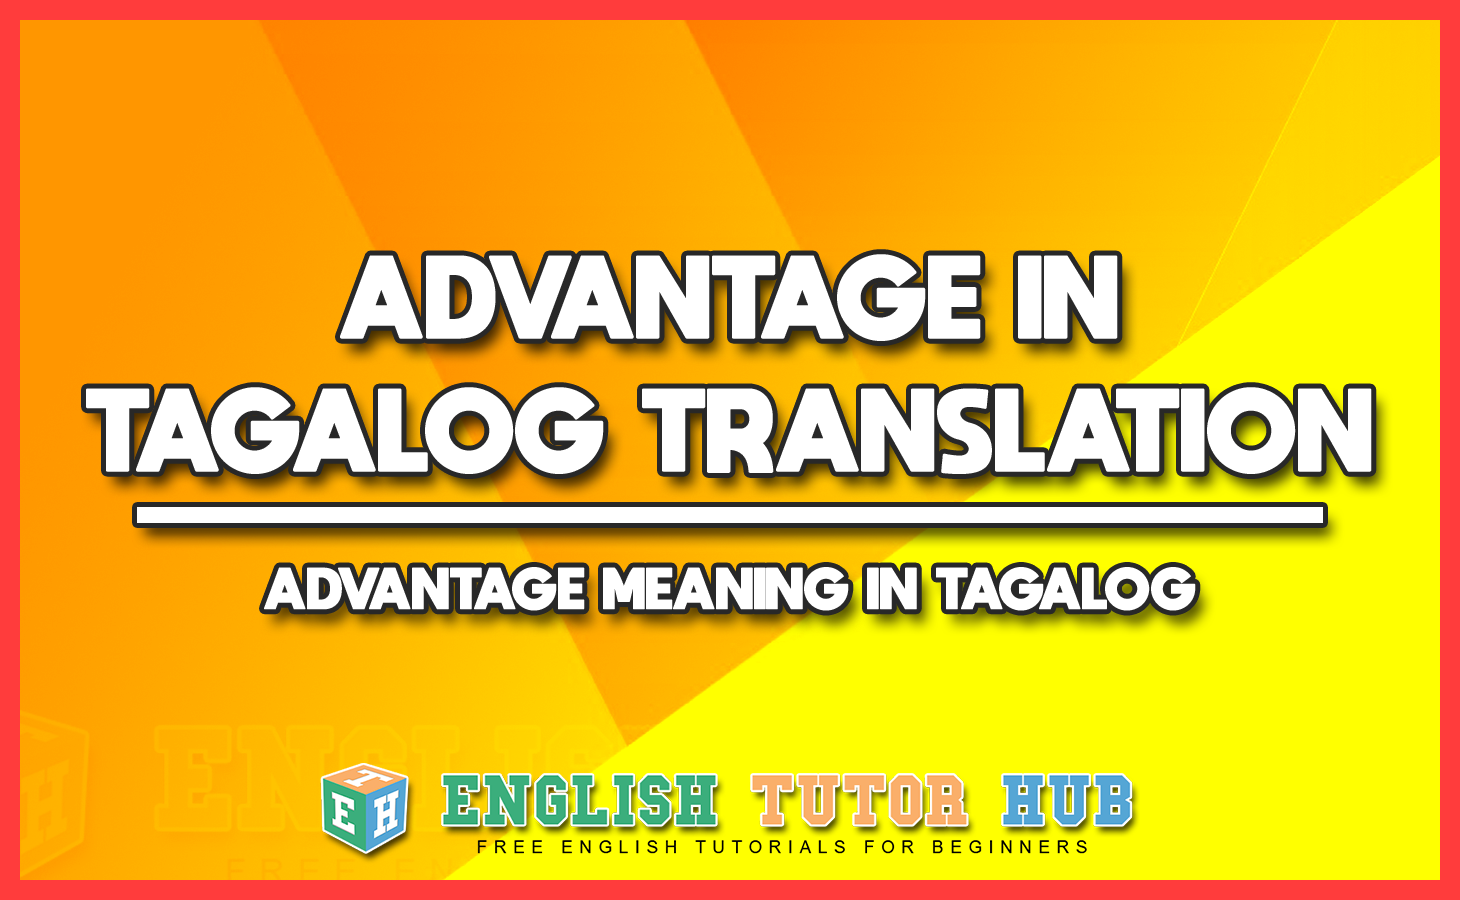 ADVANTAGE IN TAGALOG TRANSLATION - ADVANTAGE MEANING IN TAGALOG